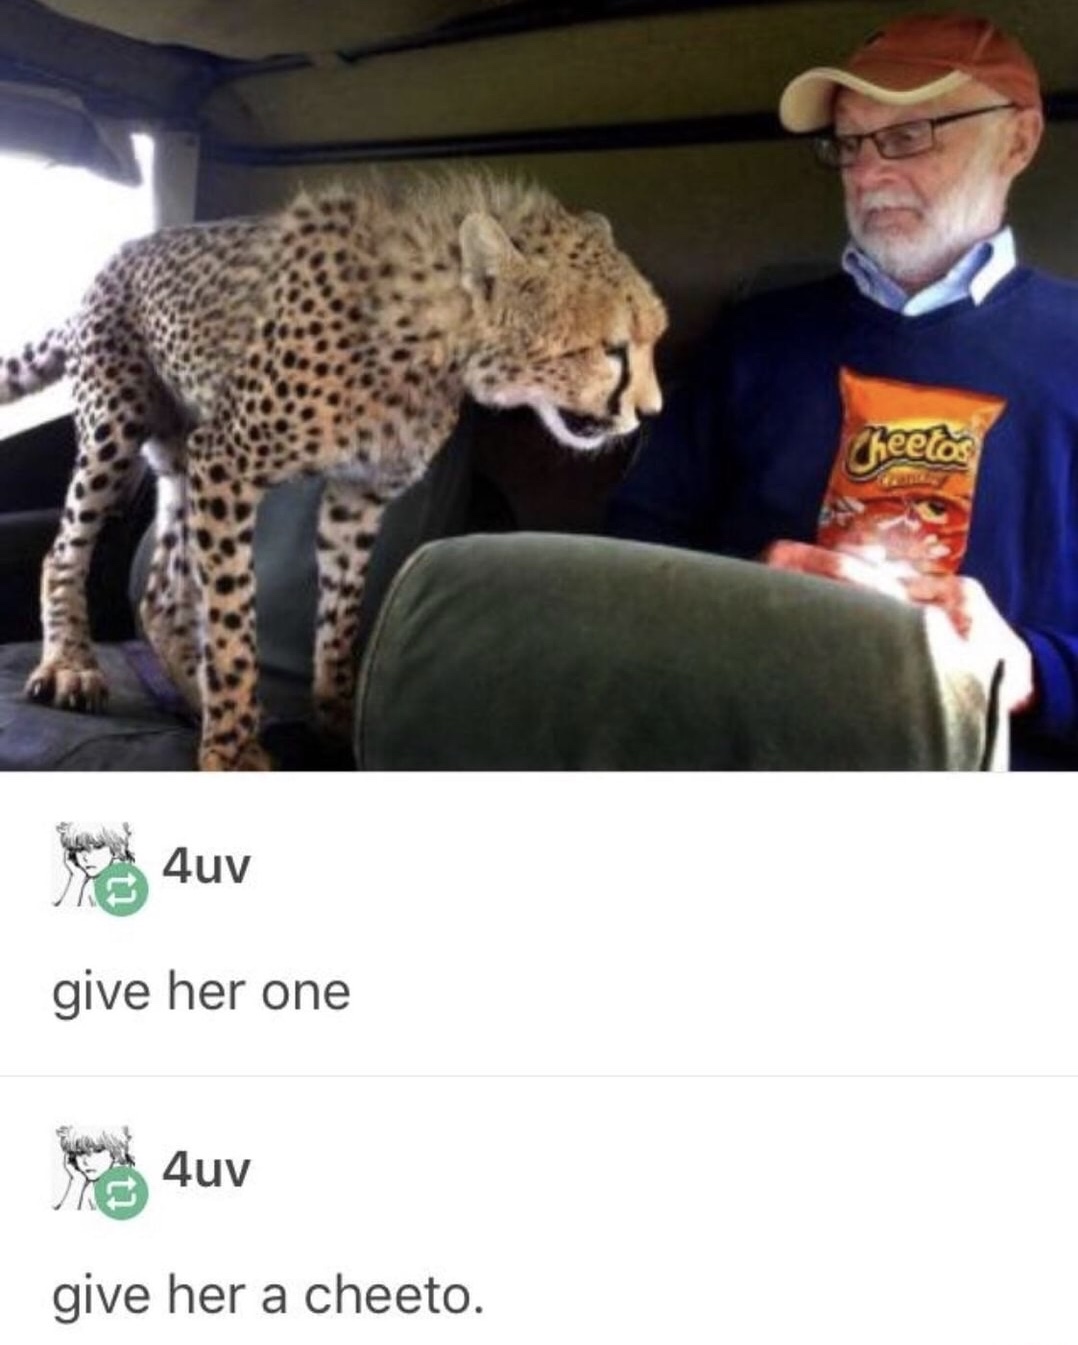 memes - cheetah cheeto meme - heetas Auv give her one 4uv give her a cheeto.